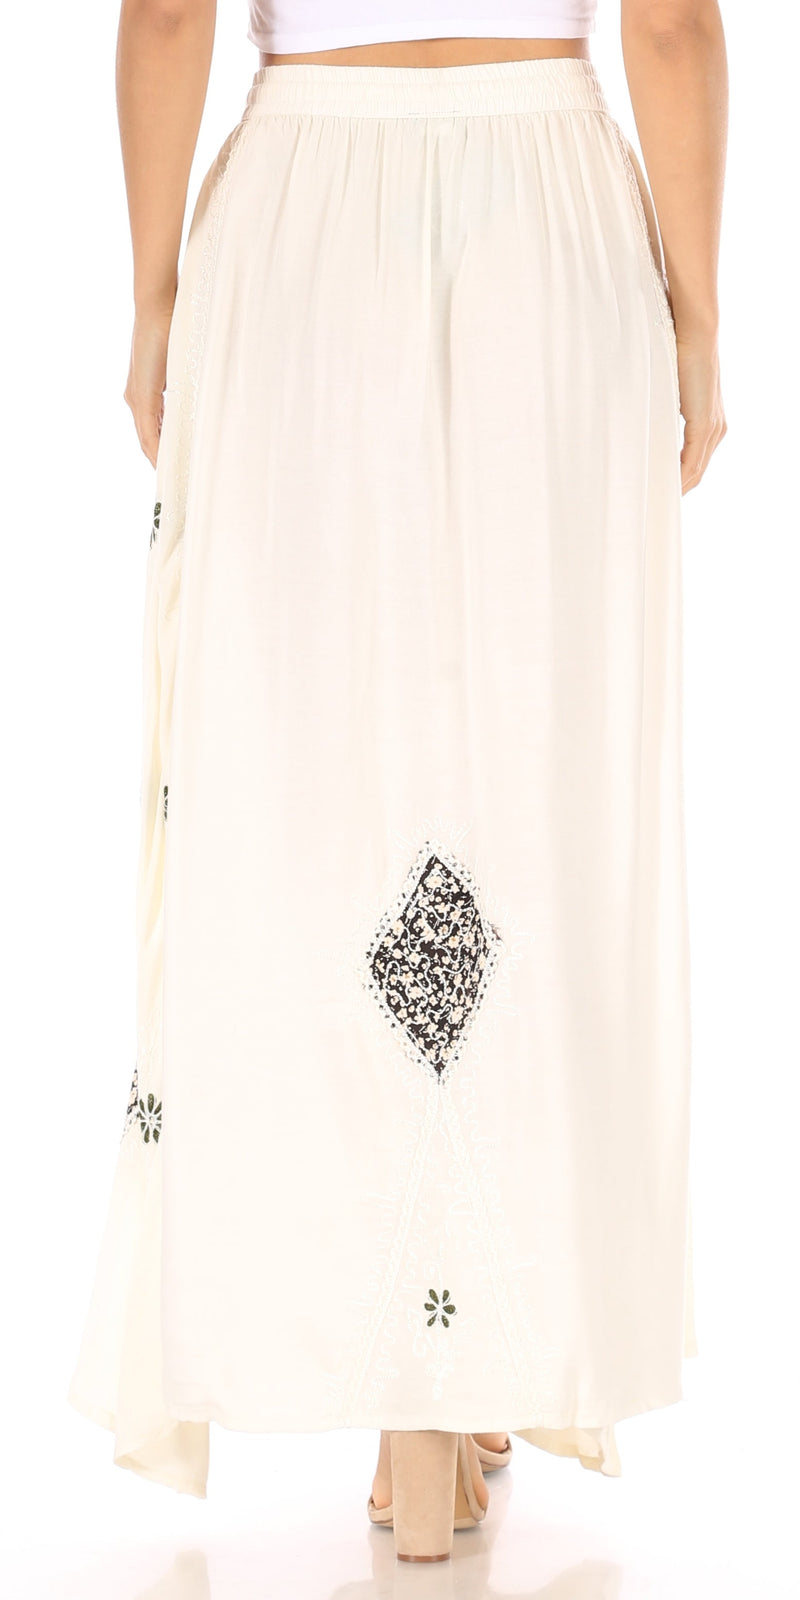 Sakkas Zarah Women's Boho Embroidery Gypsy Skirt with Lace Elastic Waist Pockets